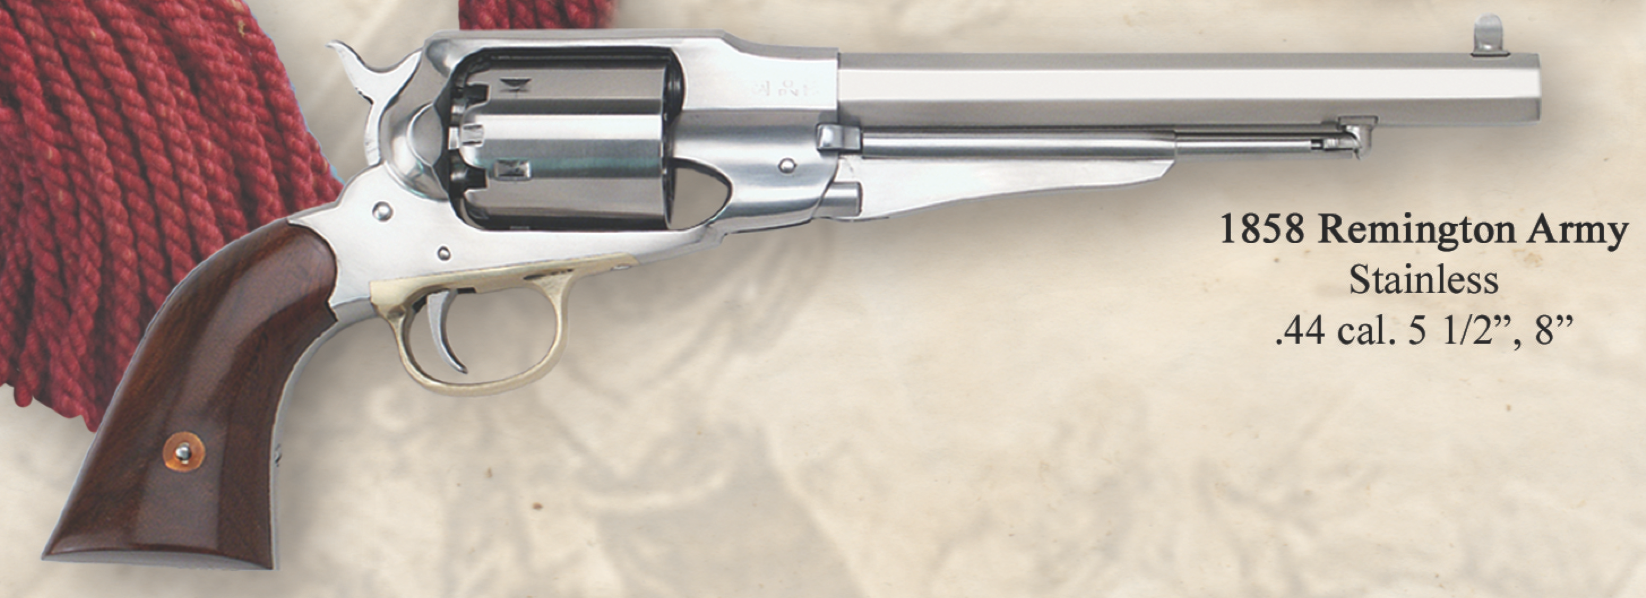 1858 Remington Army Stainless 8